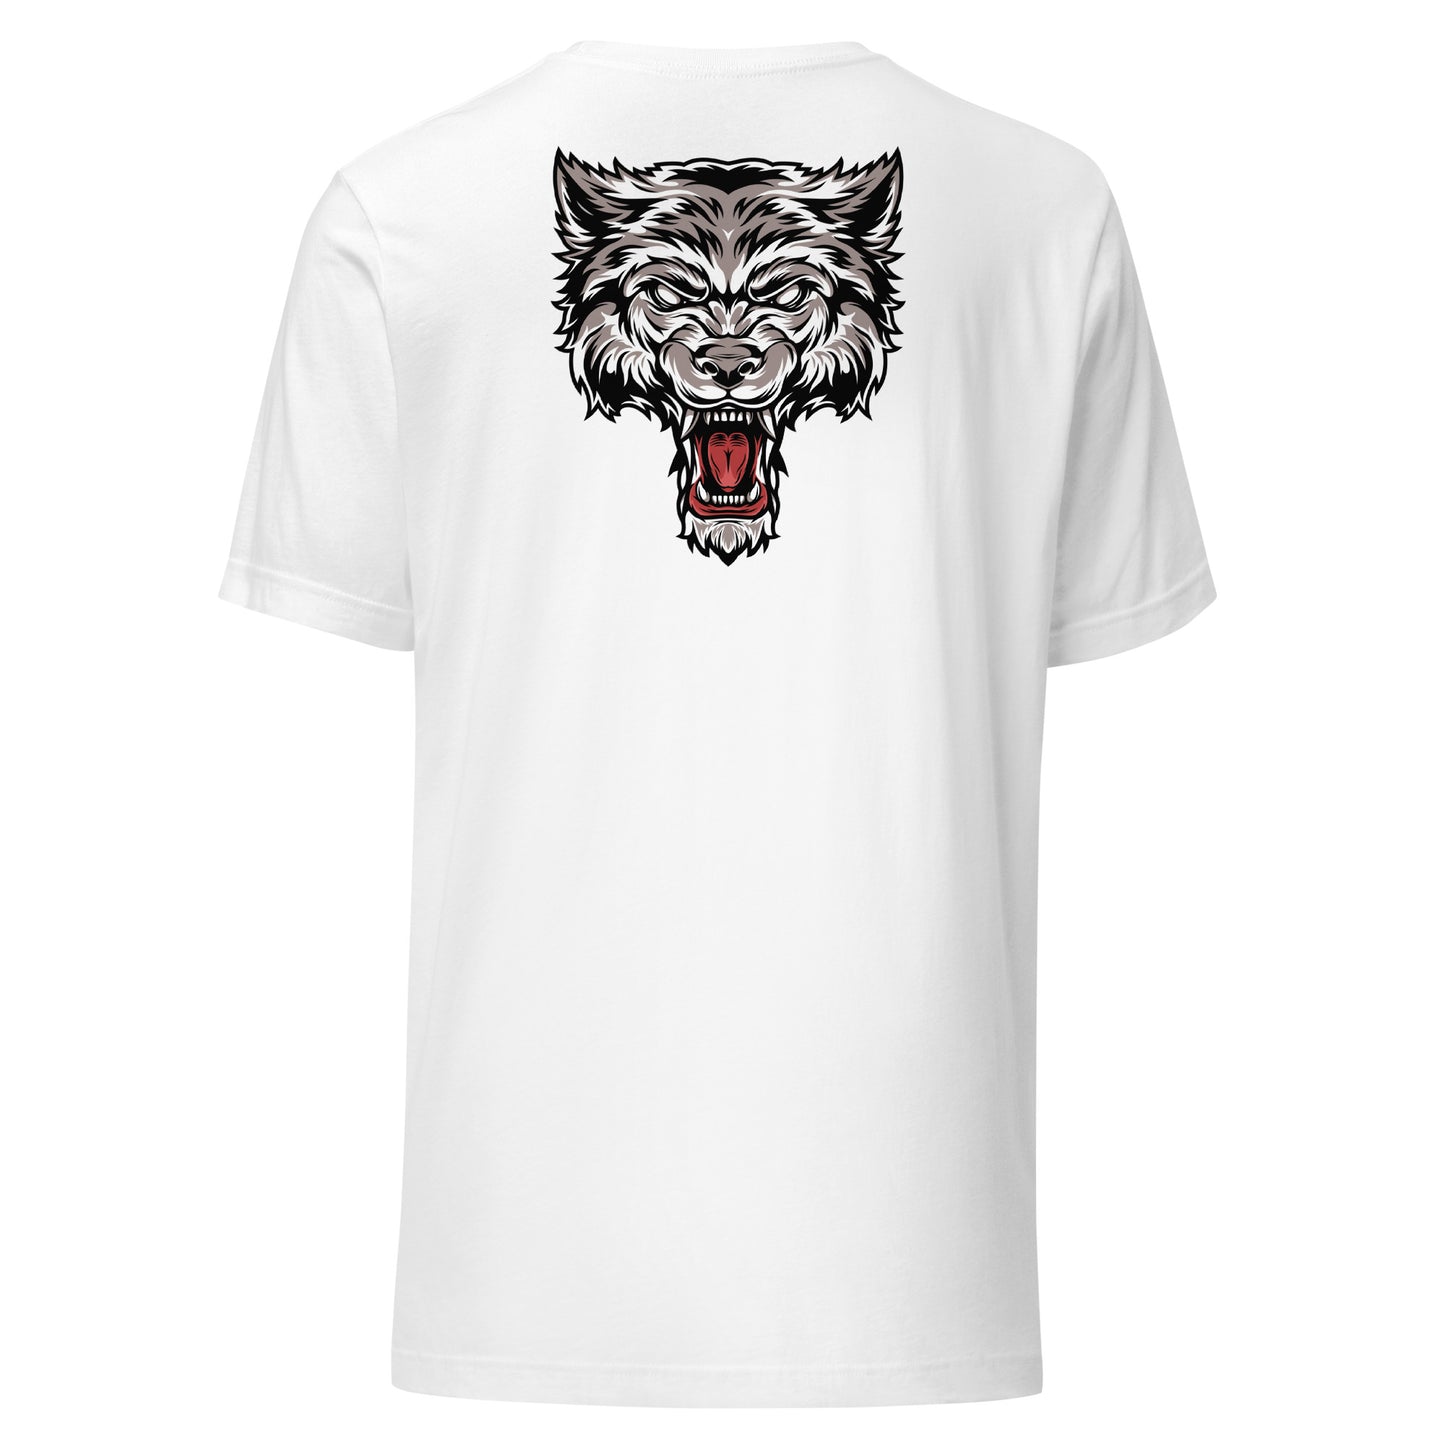 U.C Logo The Lone Wolf t-shirt